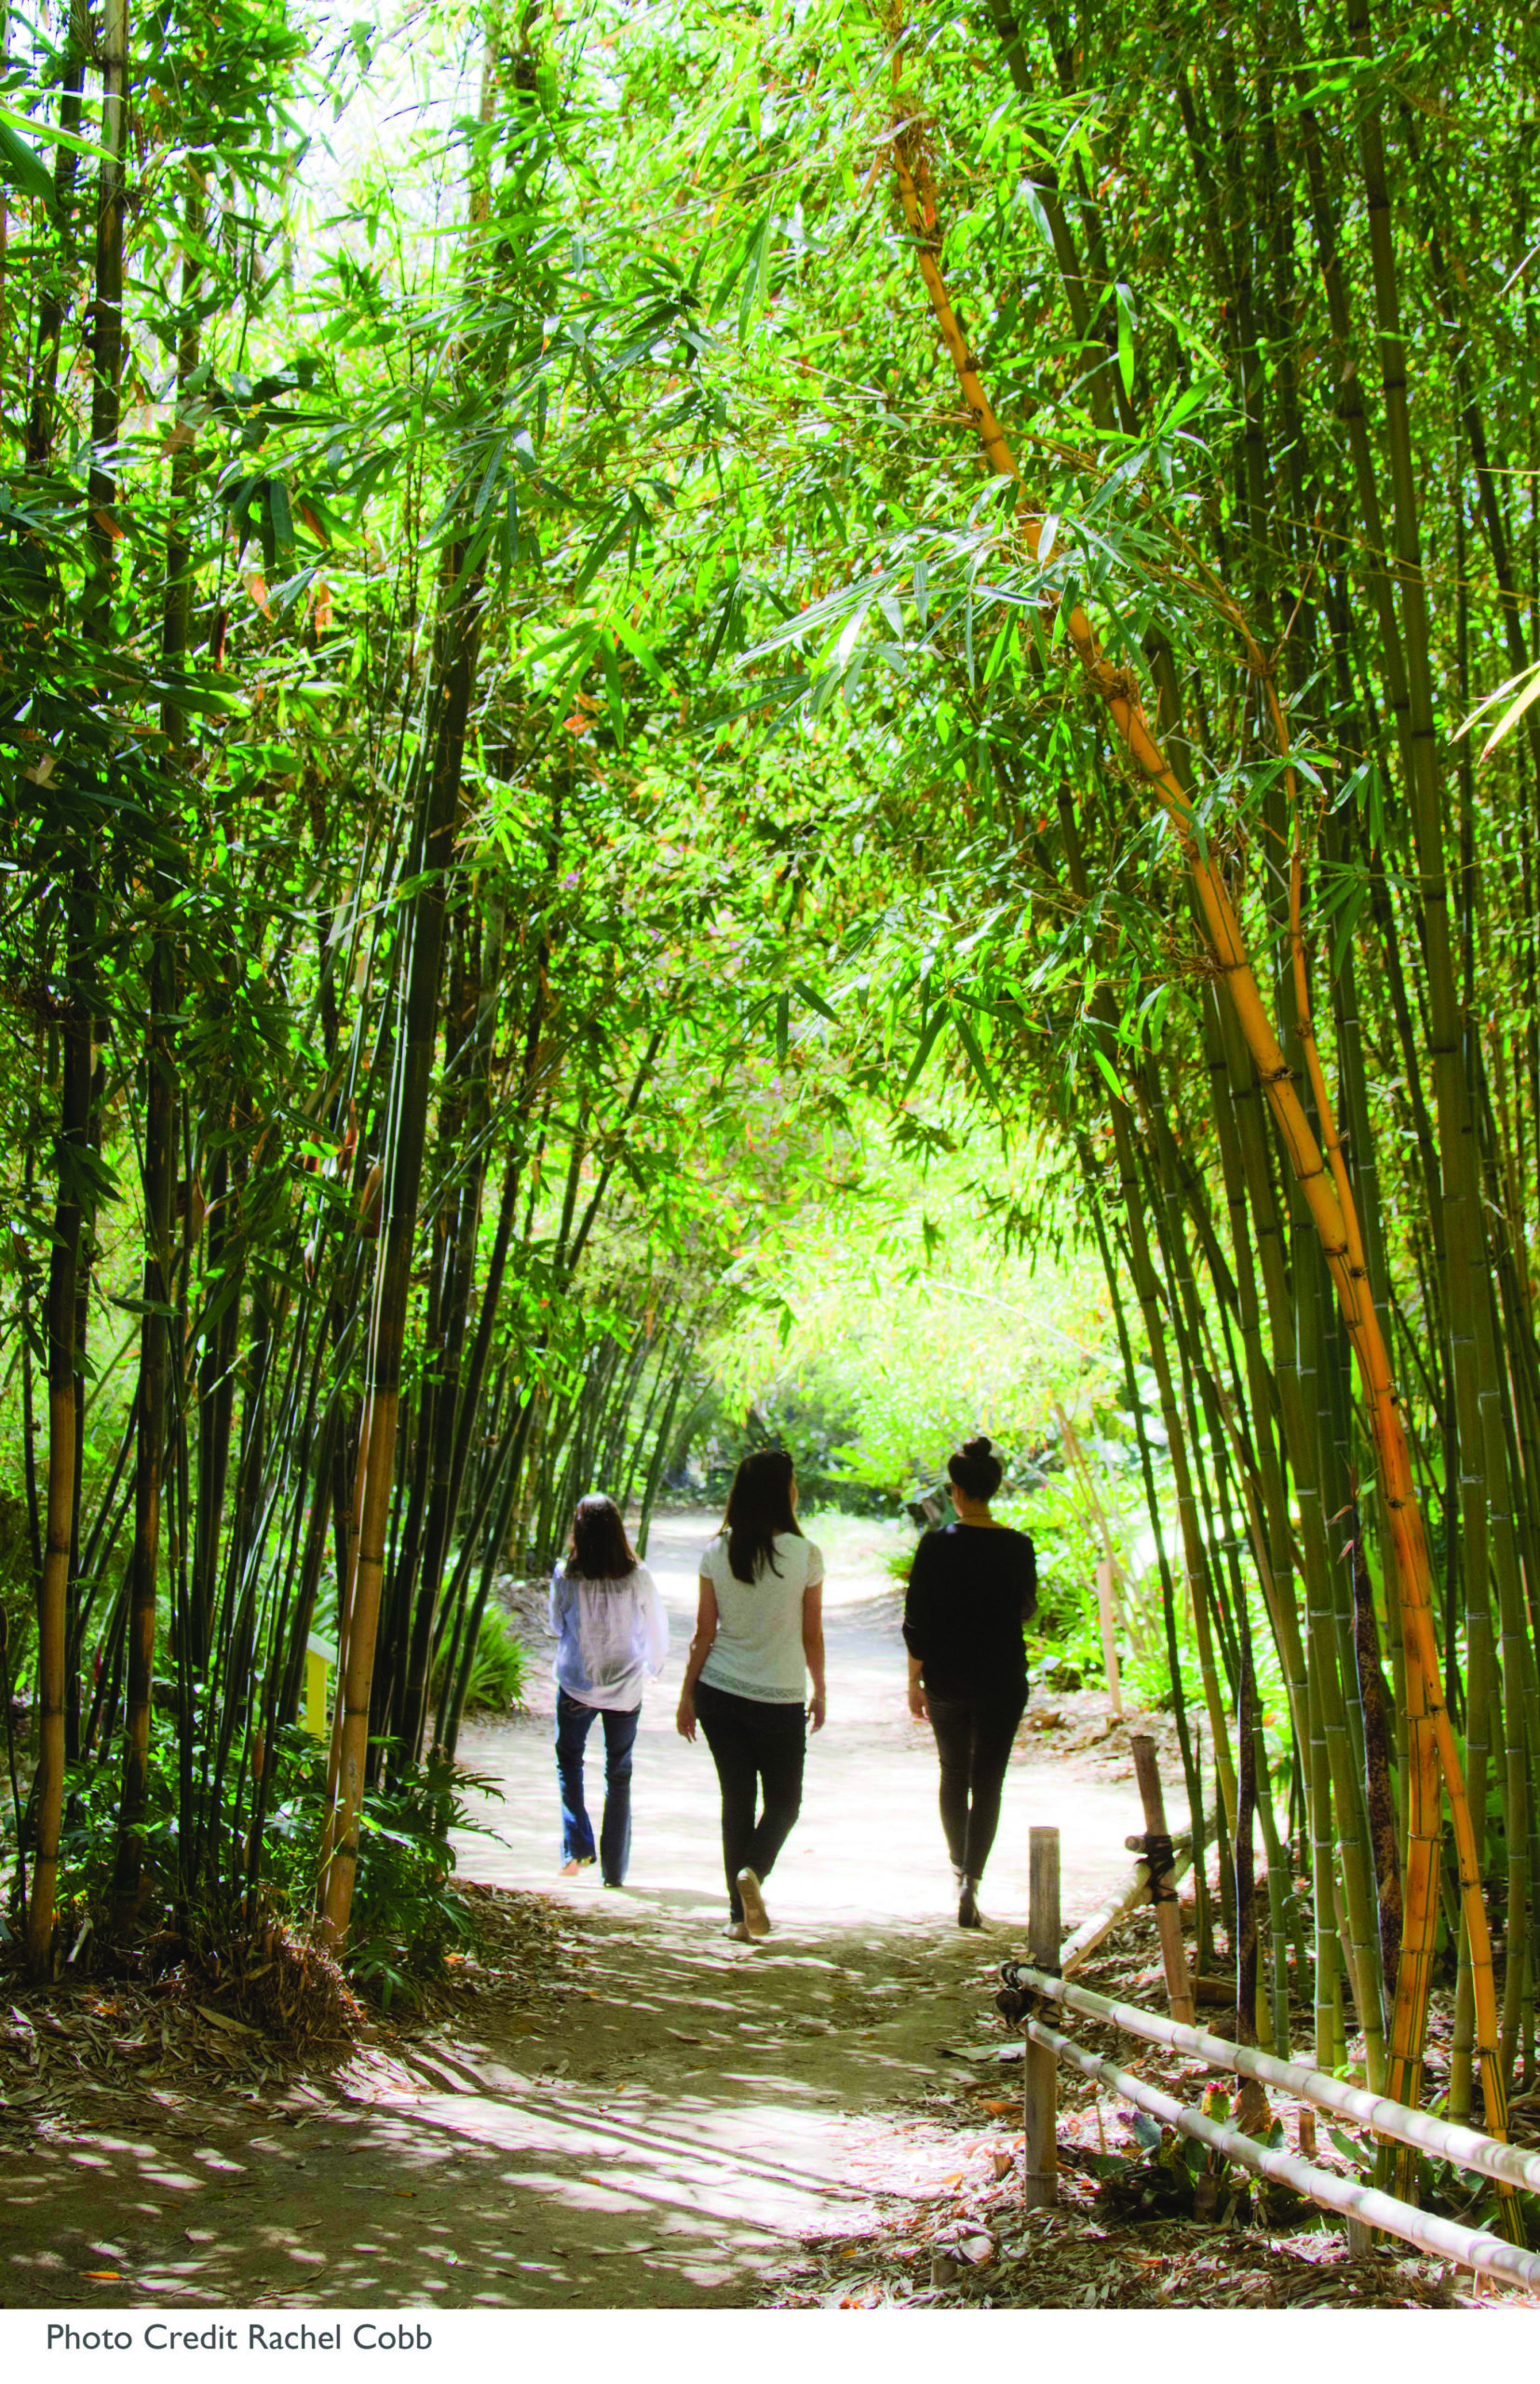 three people walking in a bamboo garden